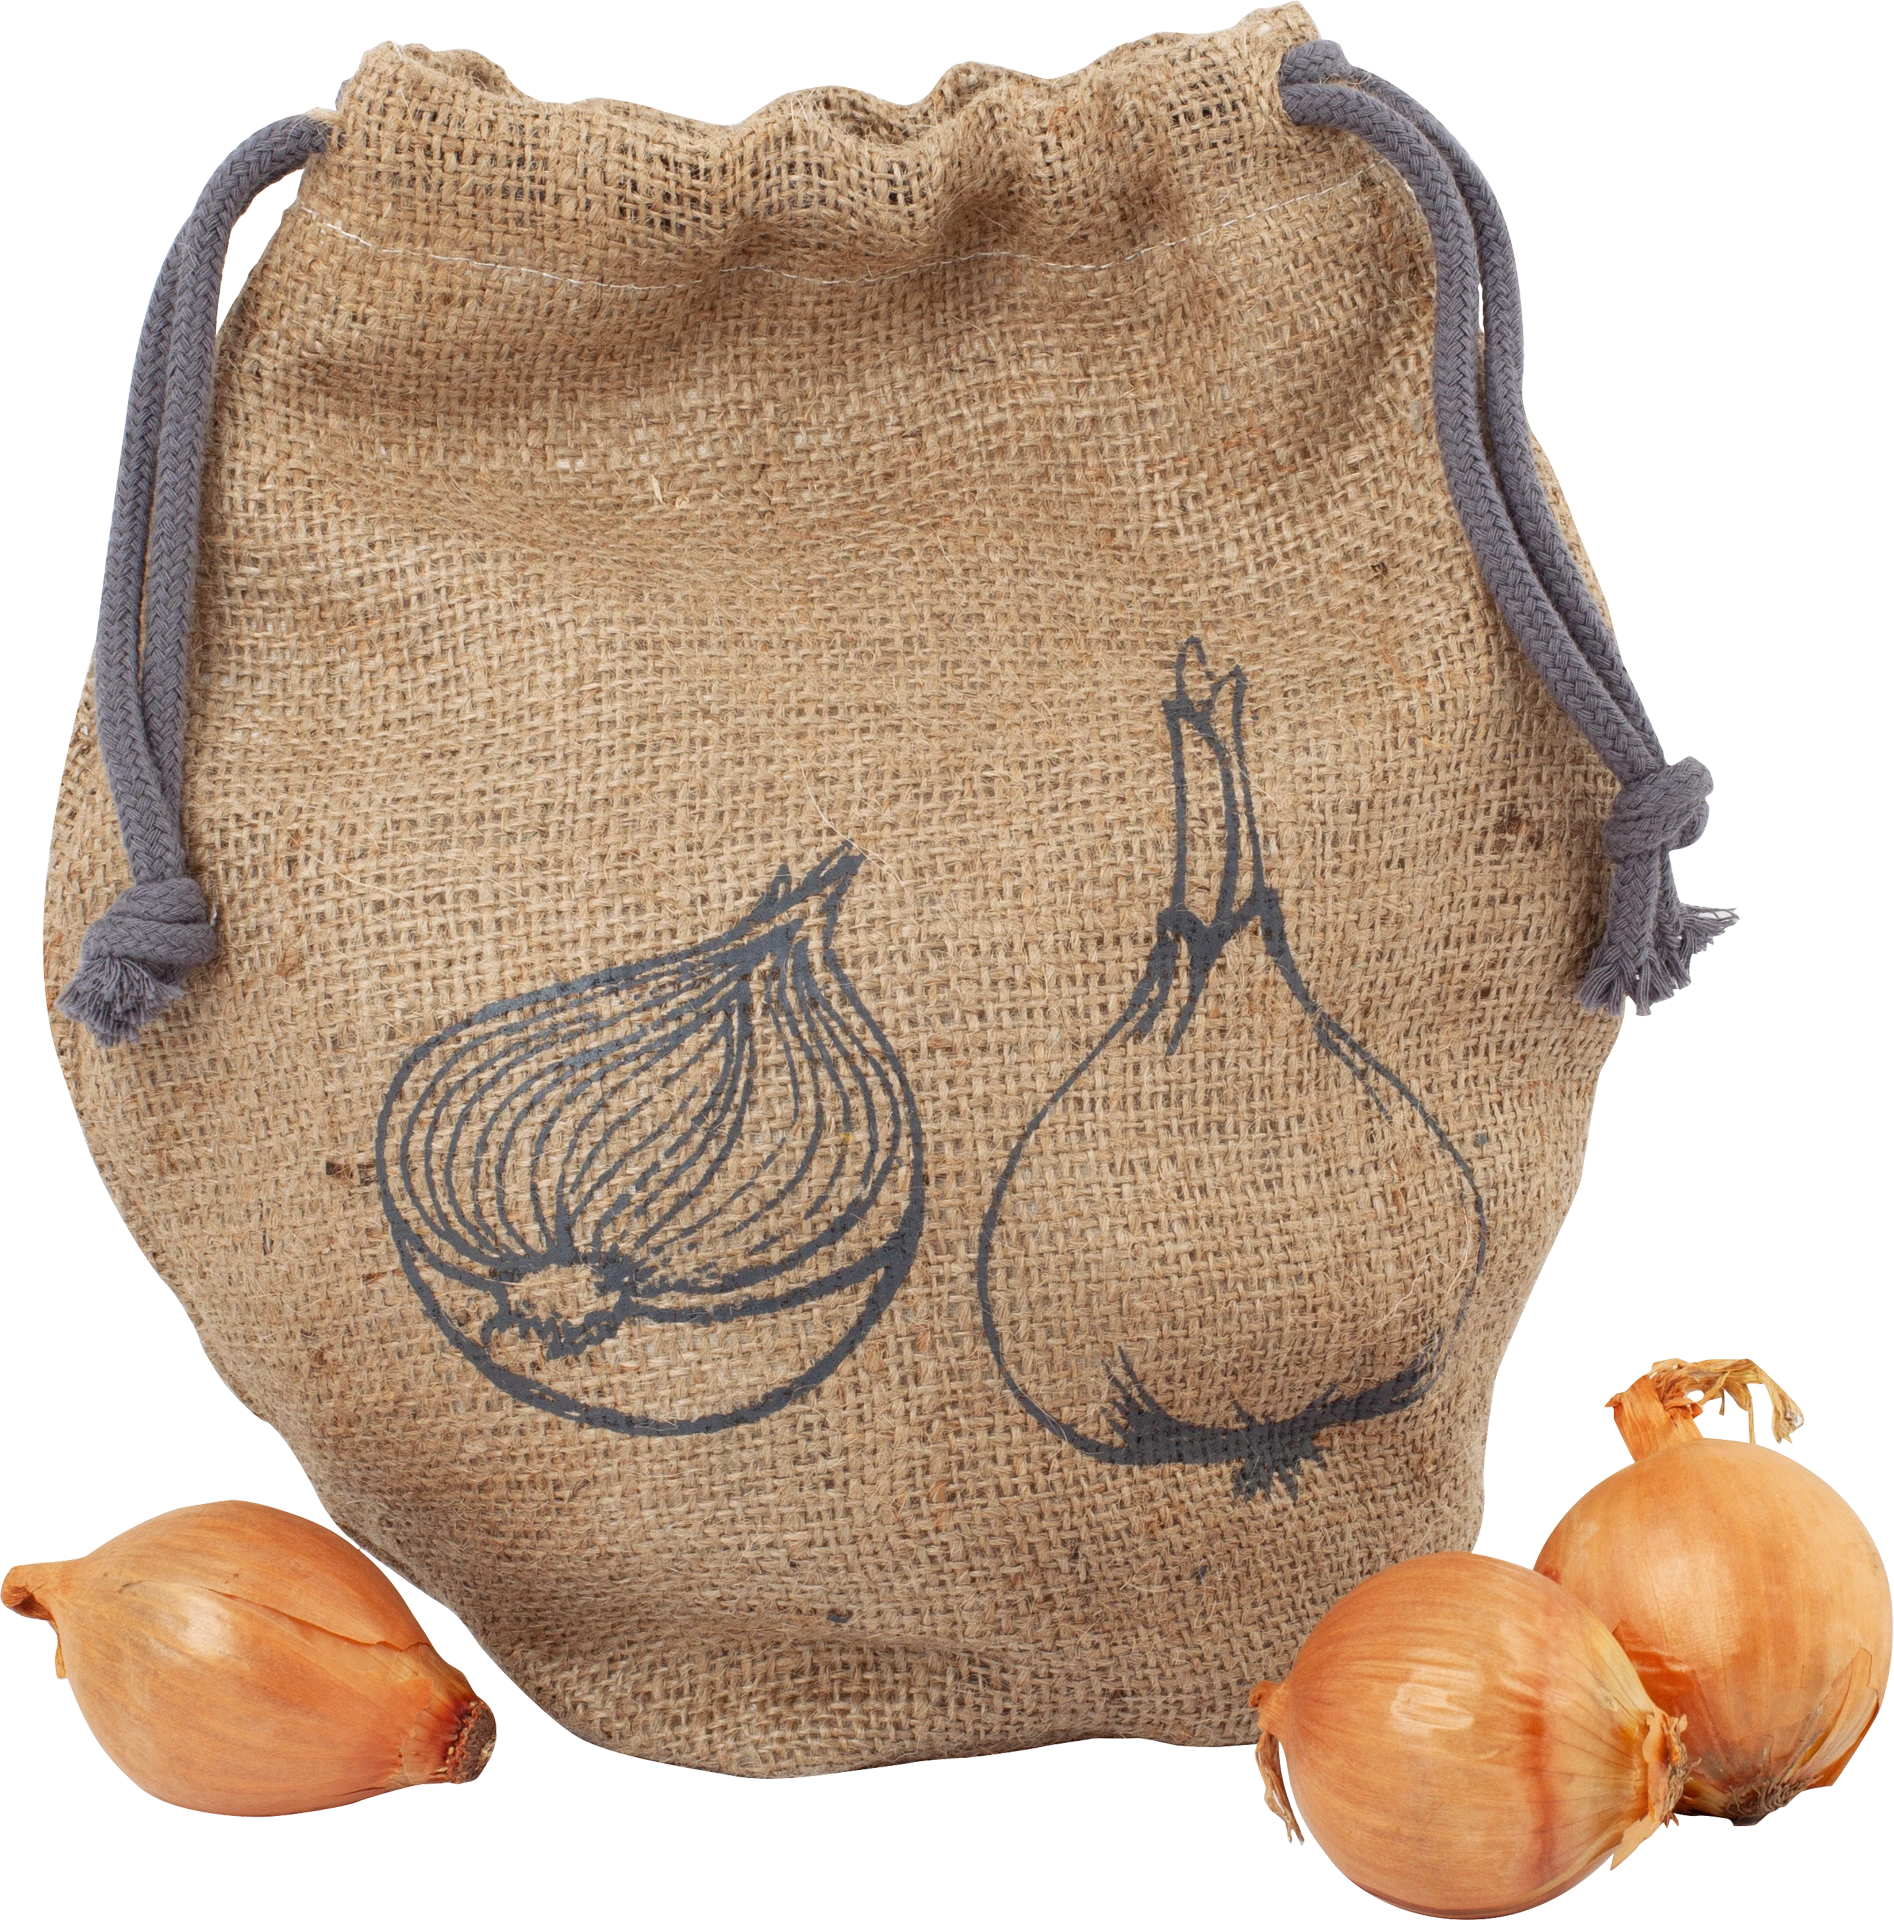 onion bag